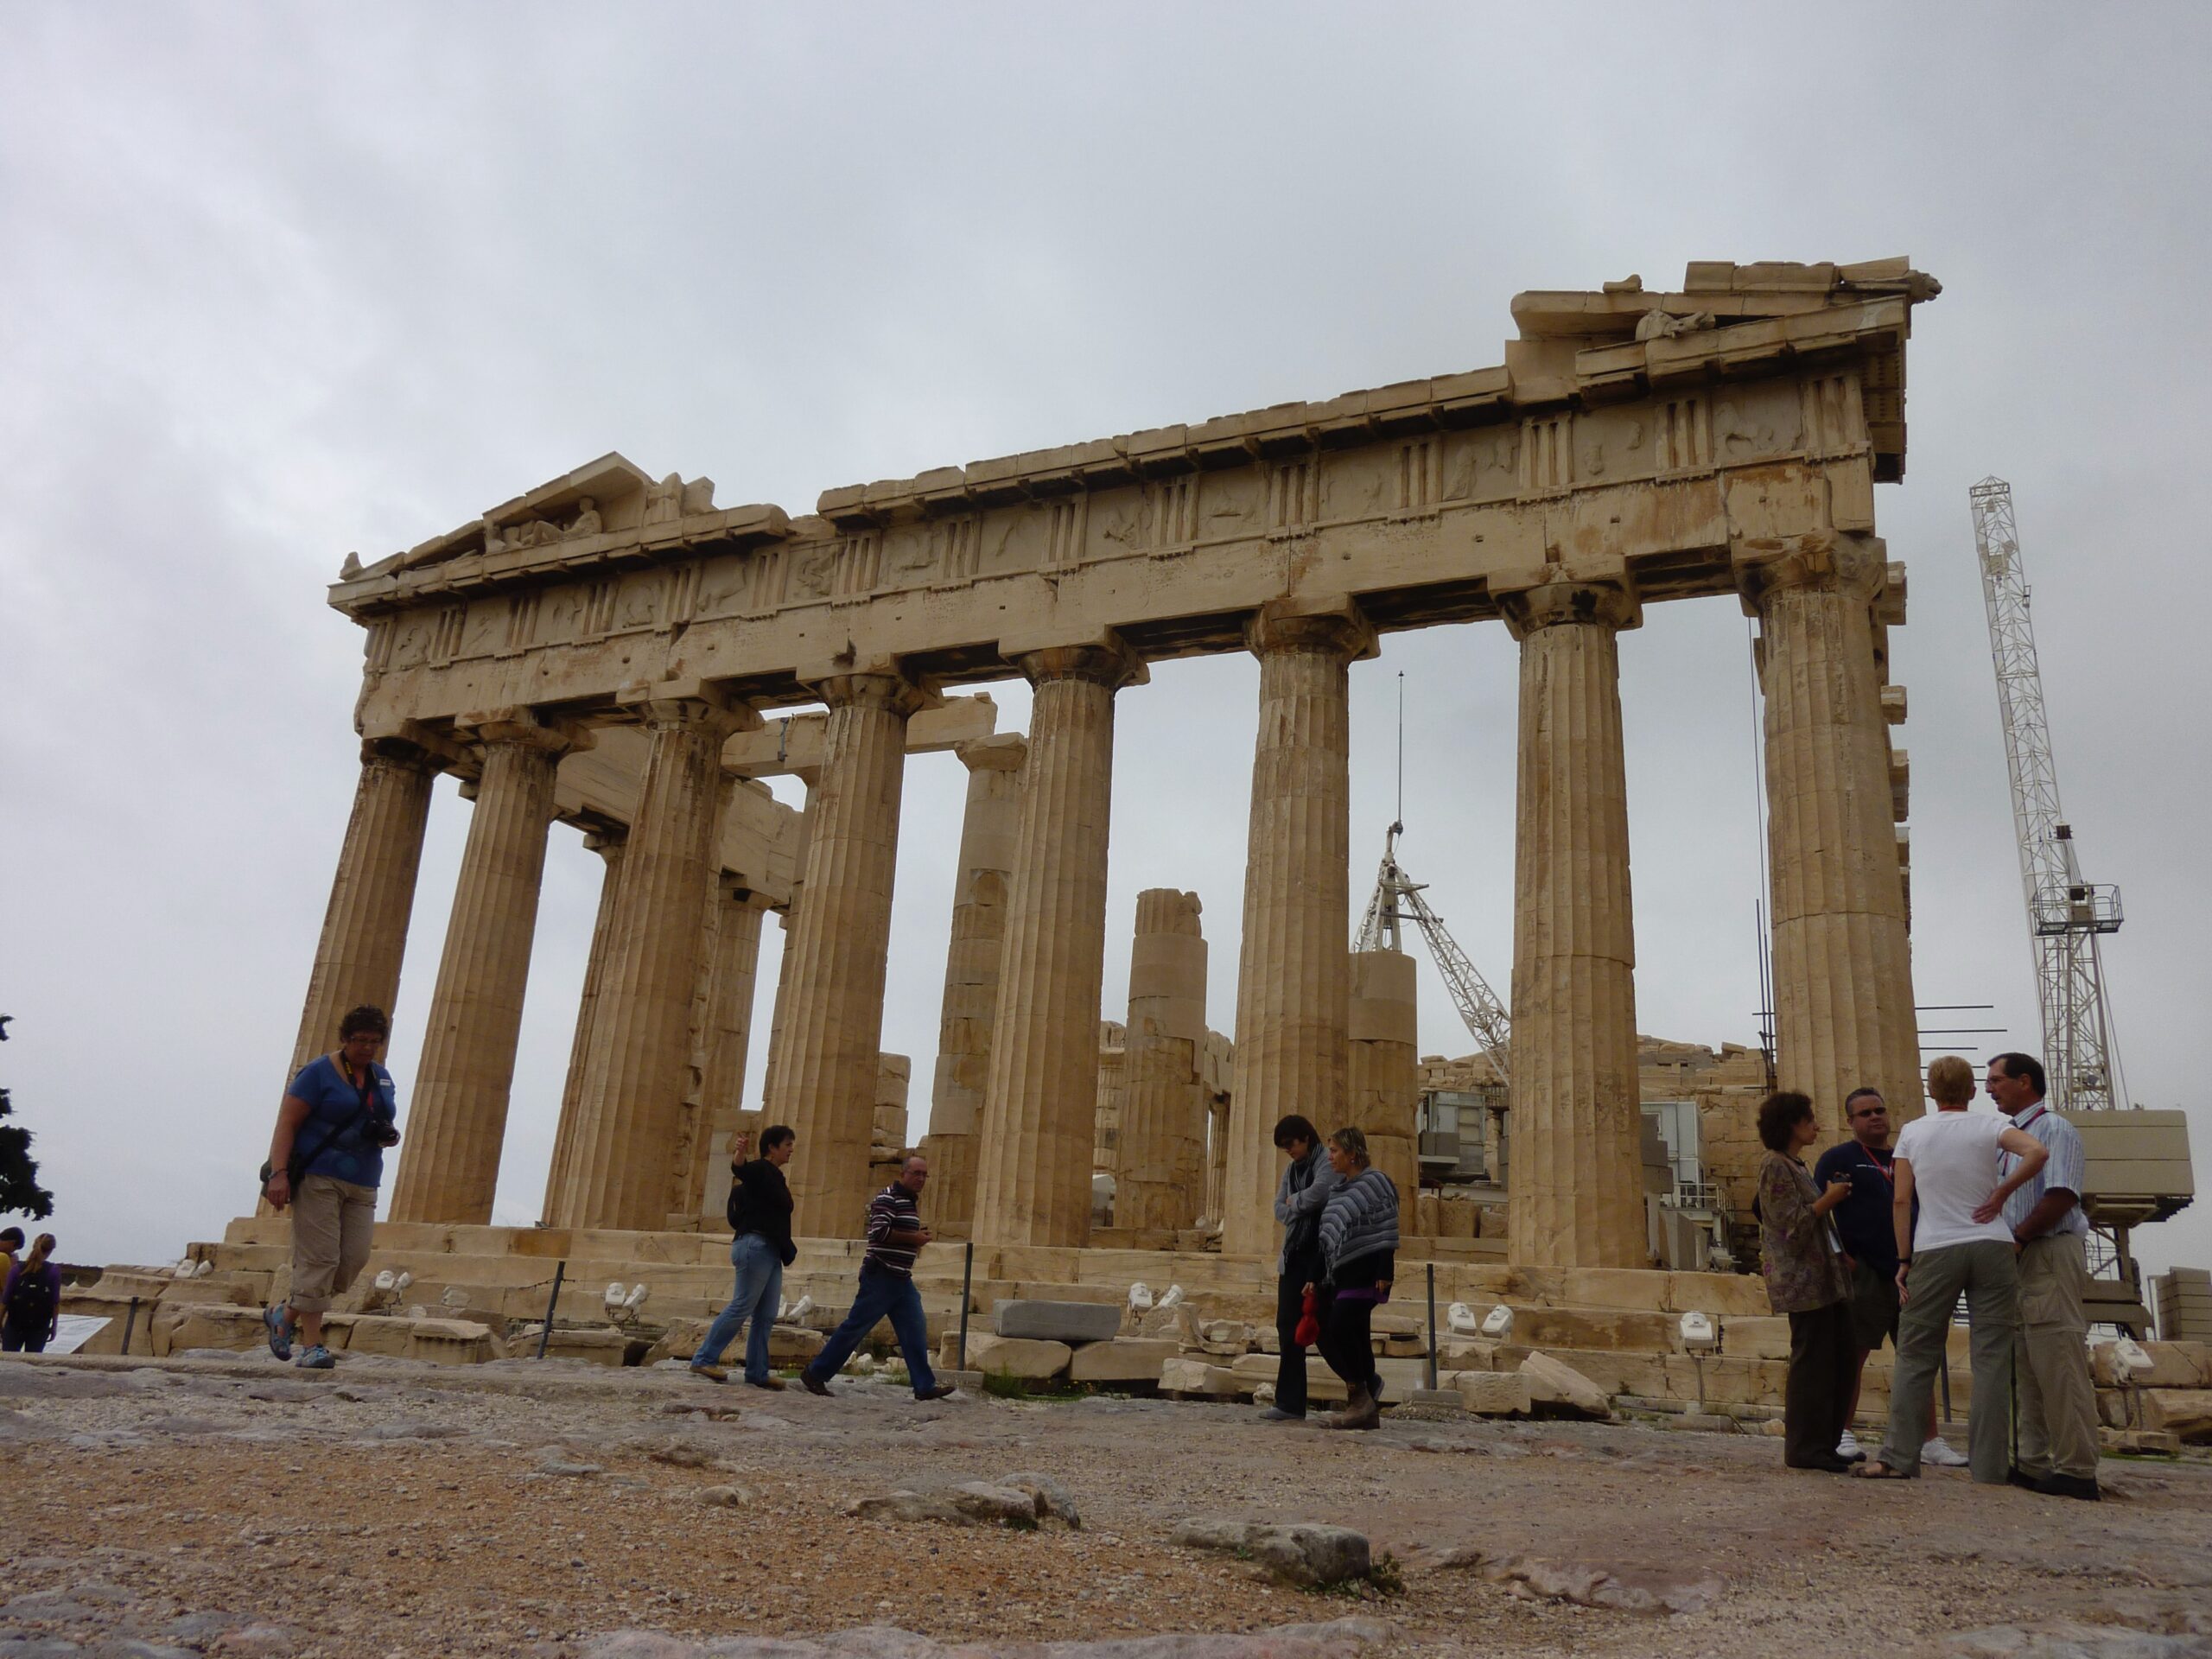 Pillars in Greece